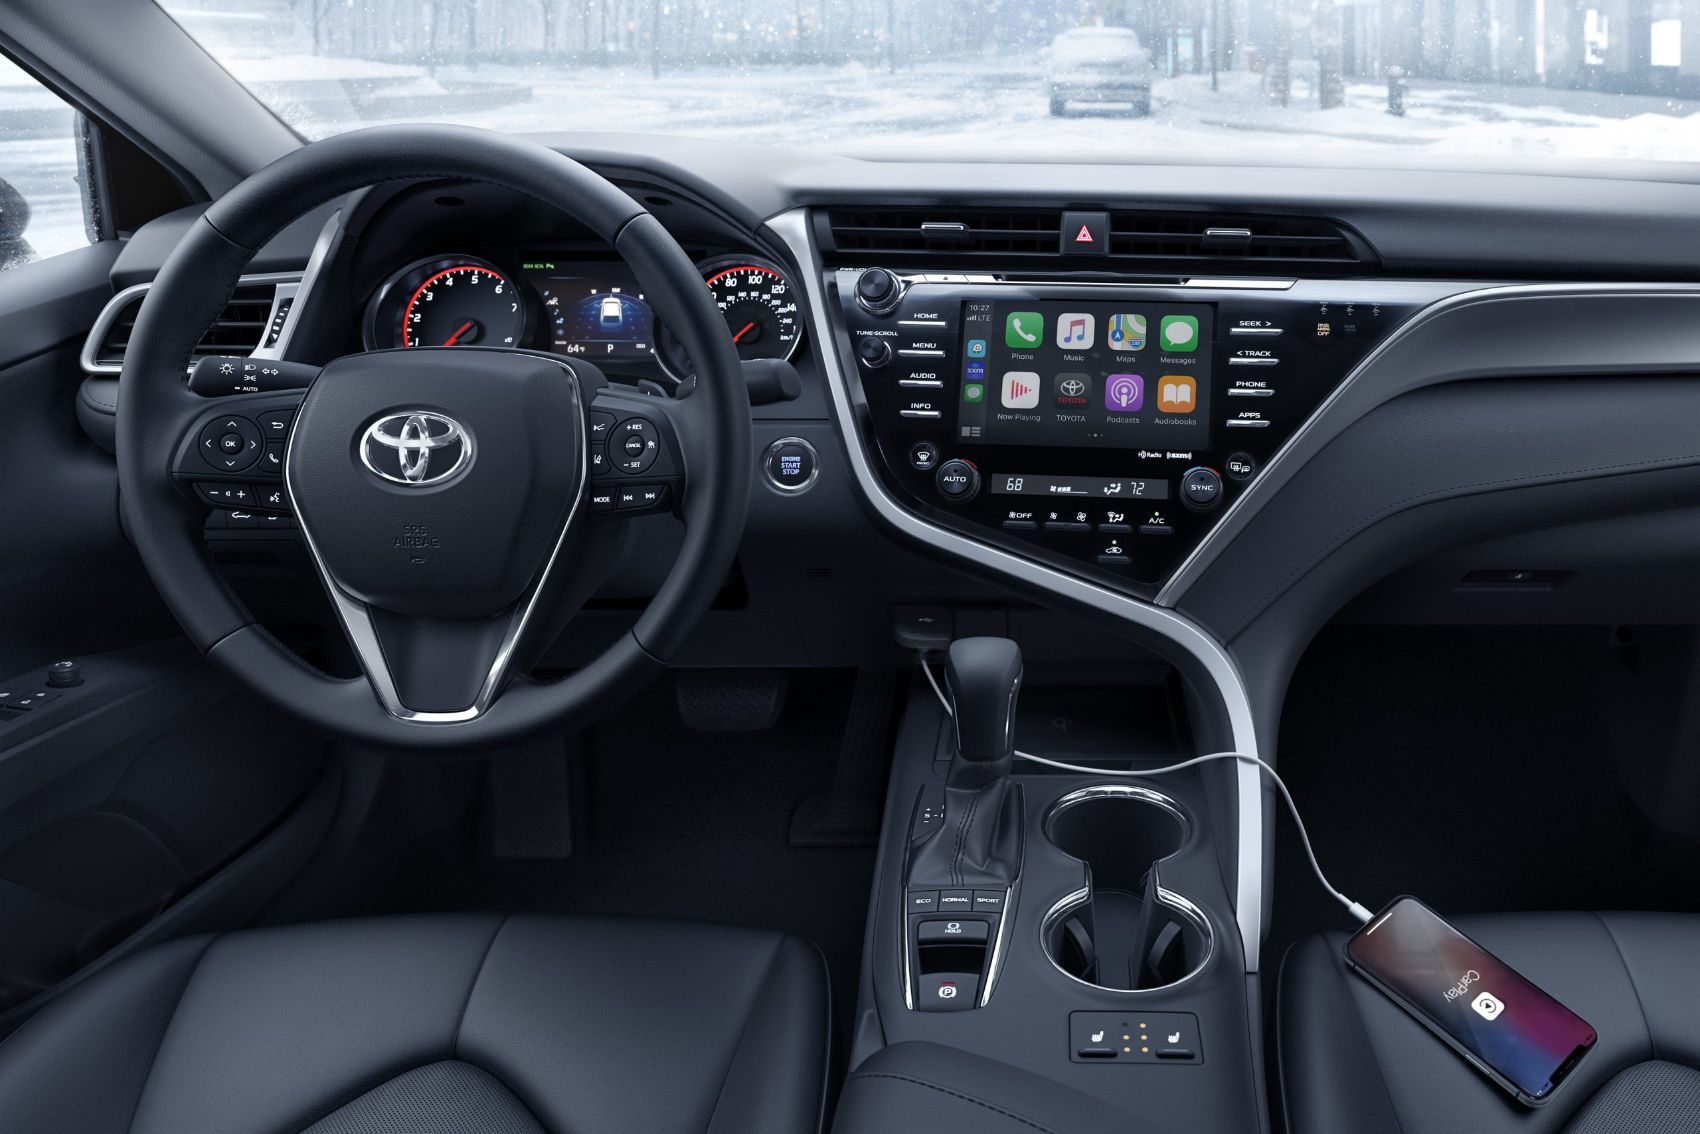 2020 Toyota Camry interior layout.